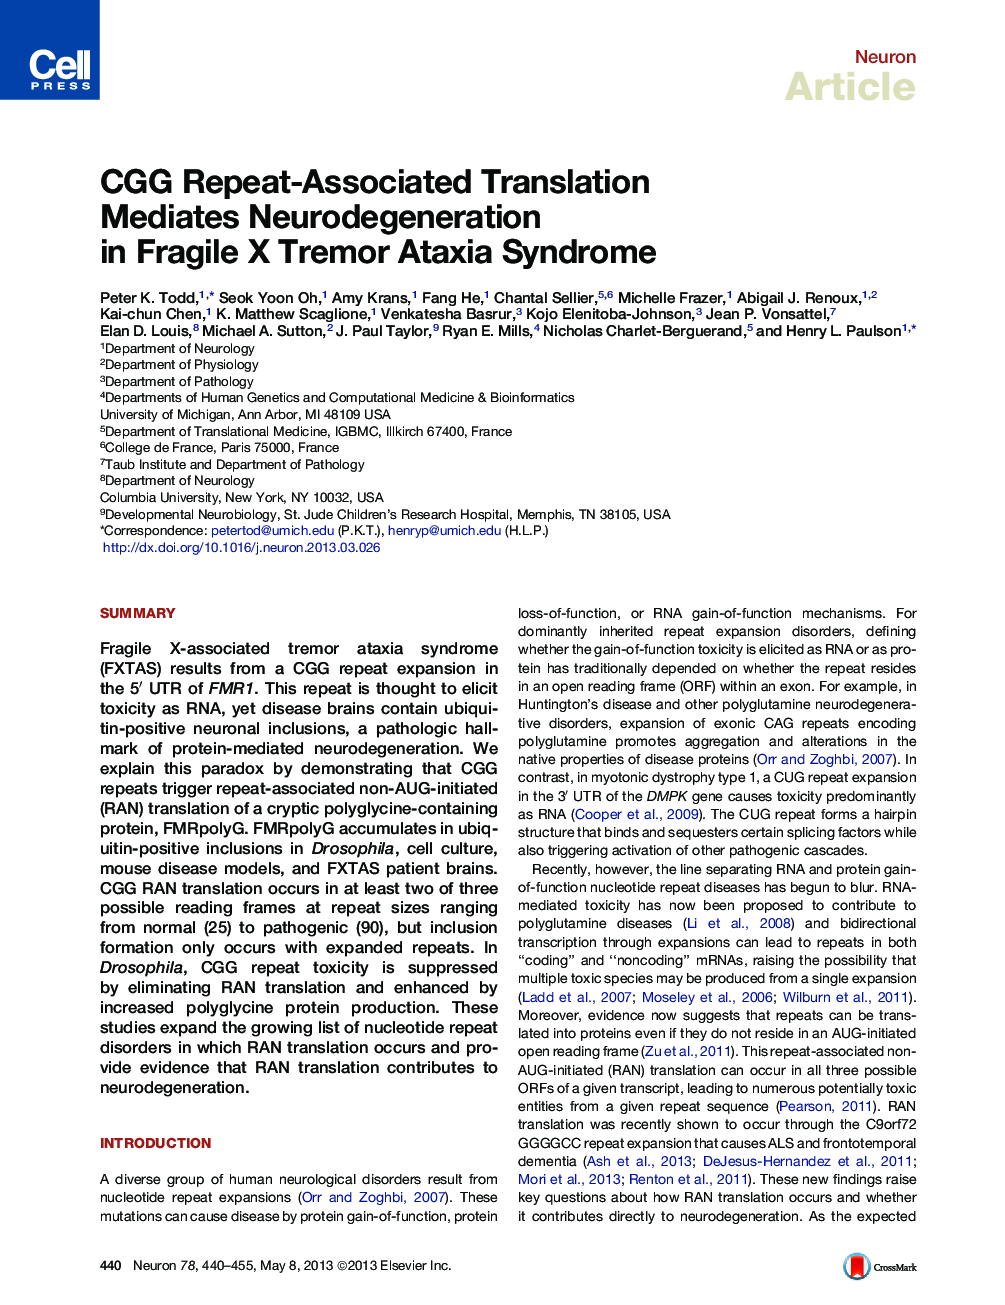 CGG Repeat-Associated Translation Mediates Neurodegeneration in Fragile X Tremor Ataxia Syndrome